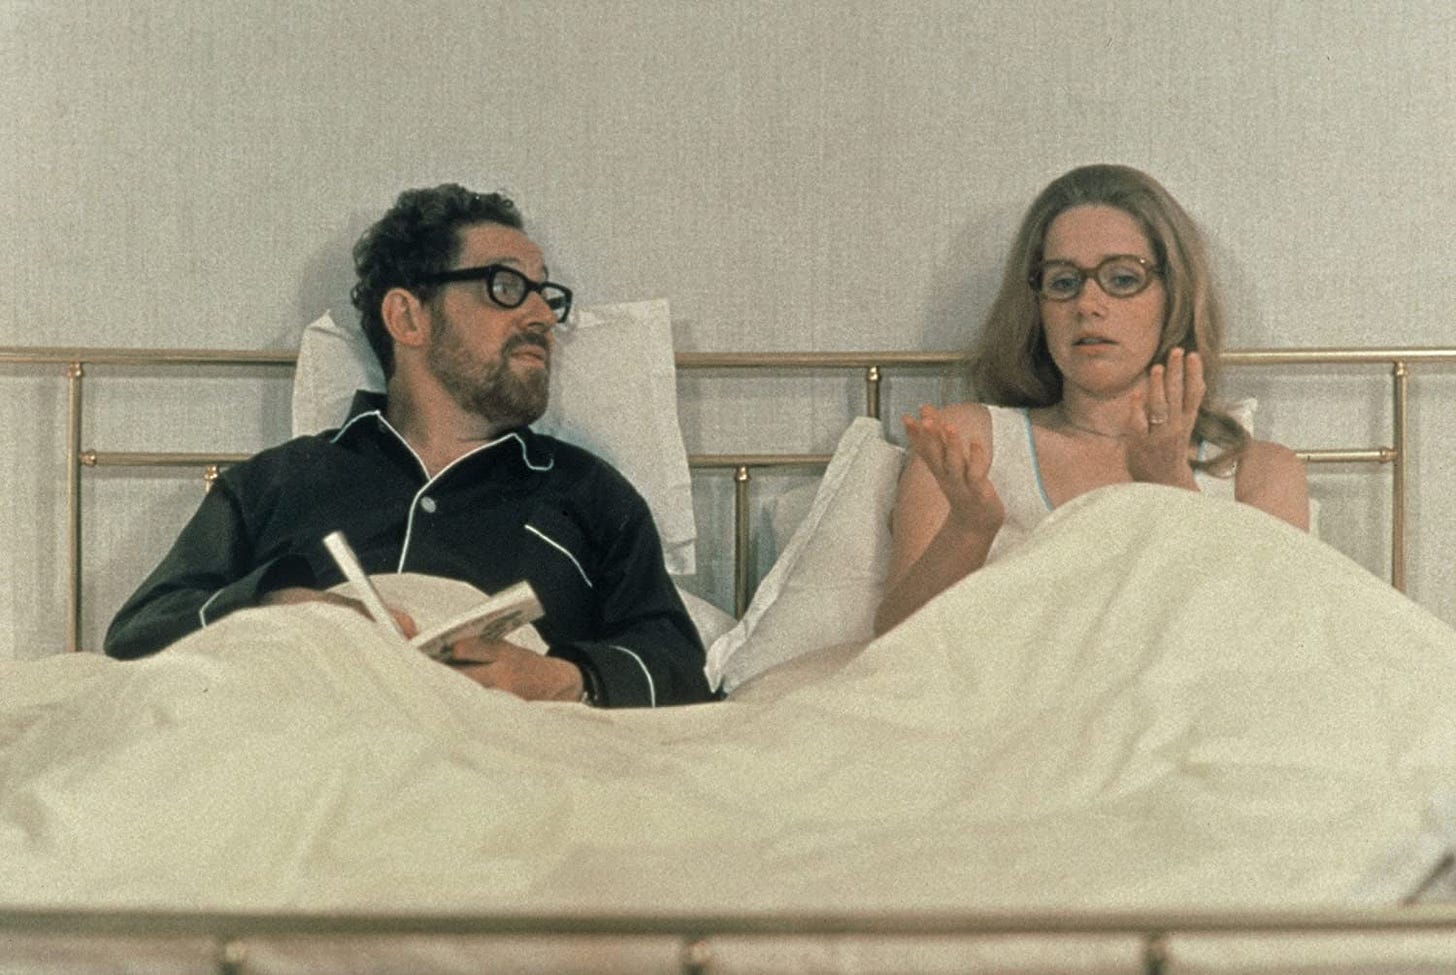 Scenes from a Marriage; by Ingmar Bergman